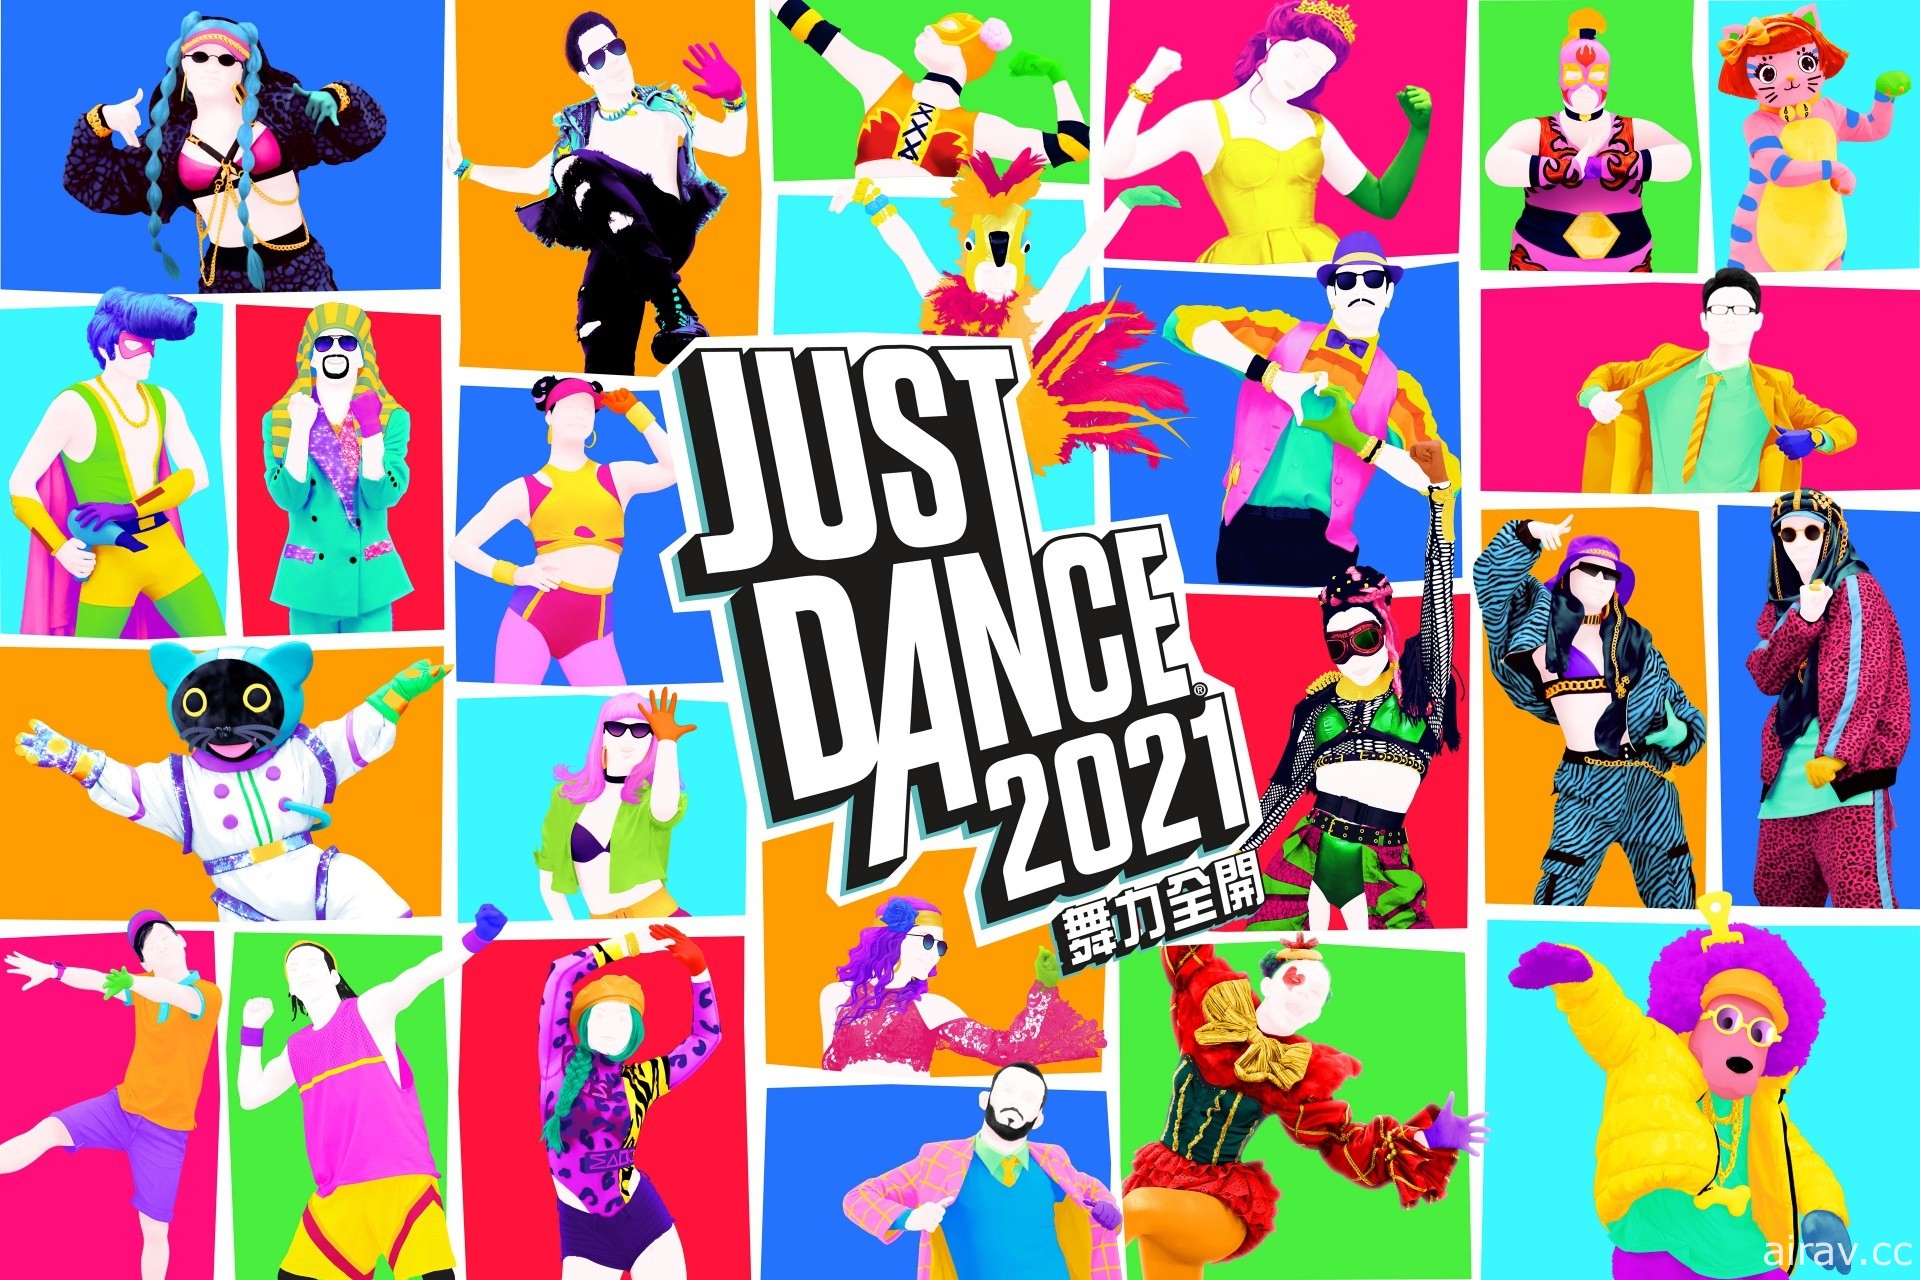 《Just Dance 舞力全開 2021》將於 11 月 12 日推出 帶來 40 首火熱新歌